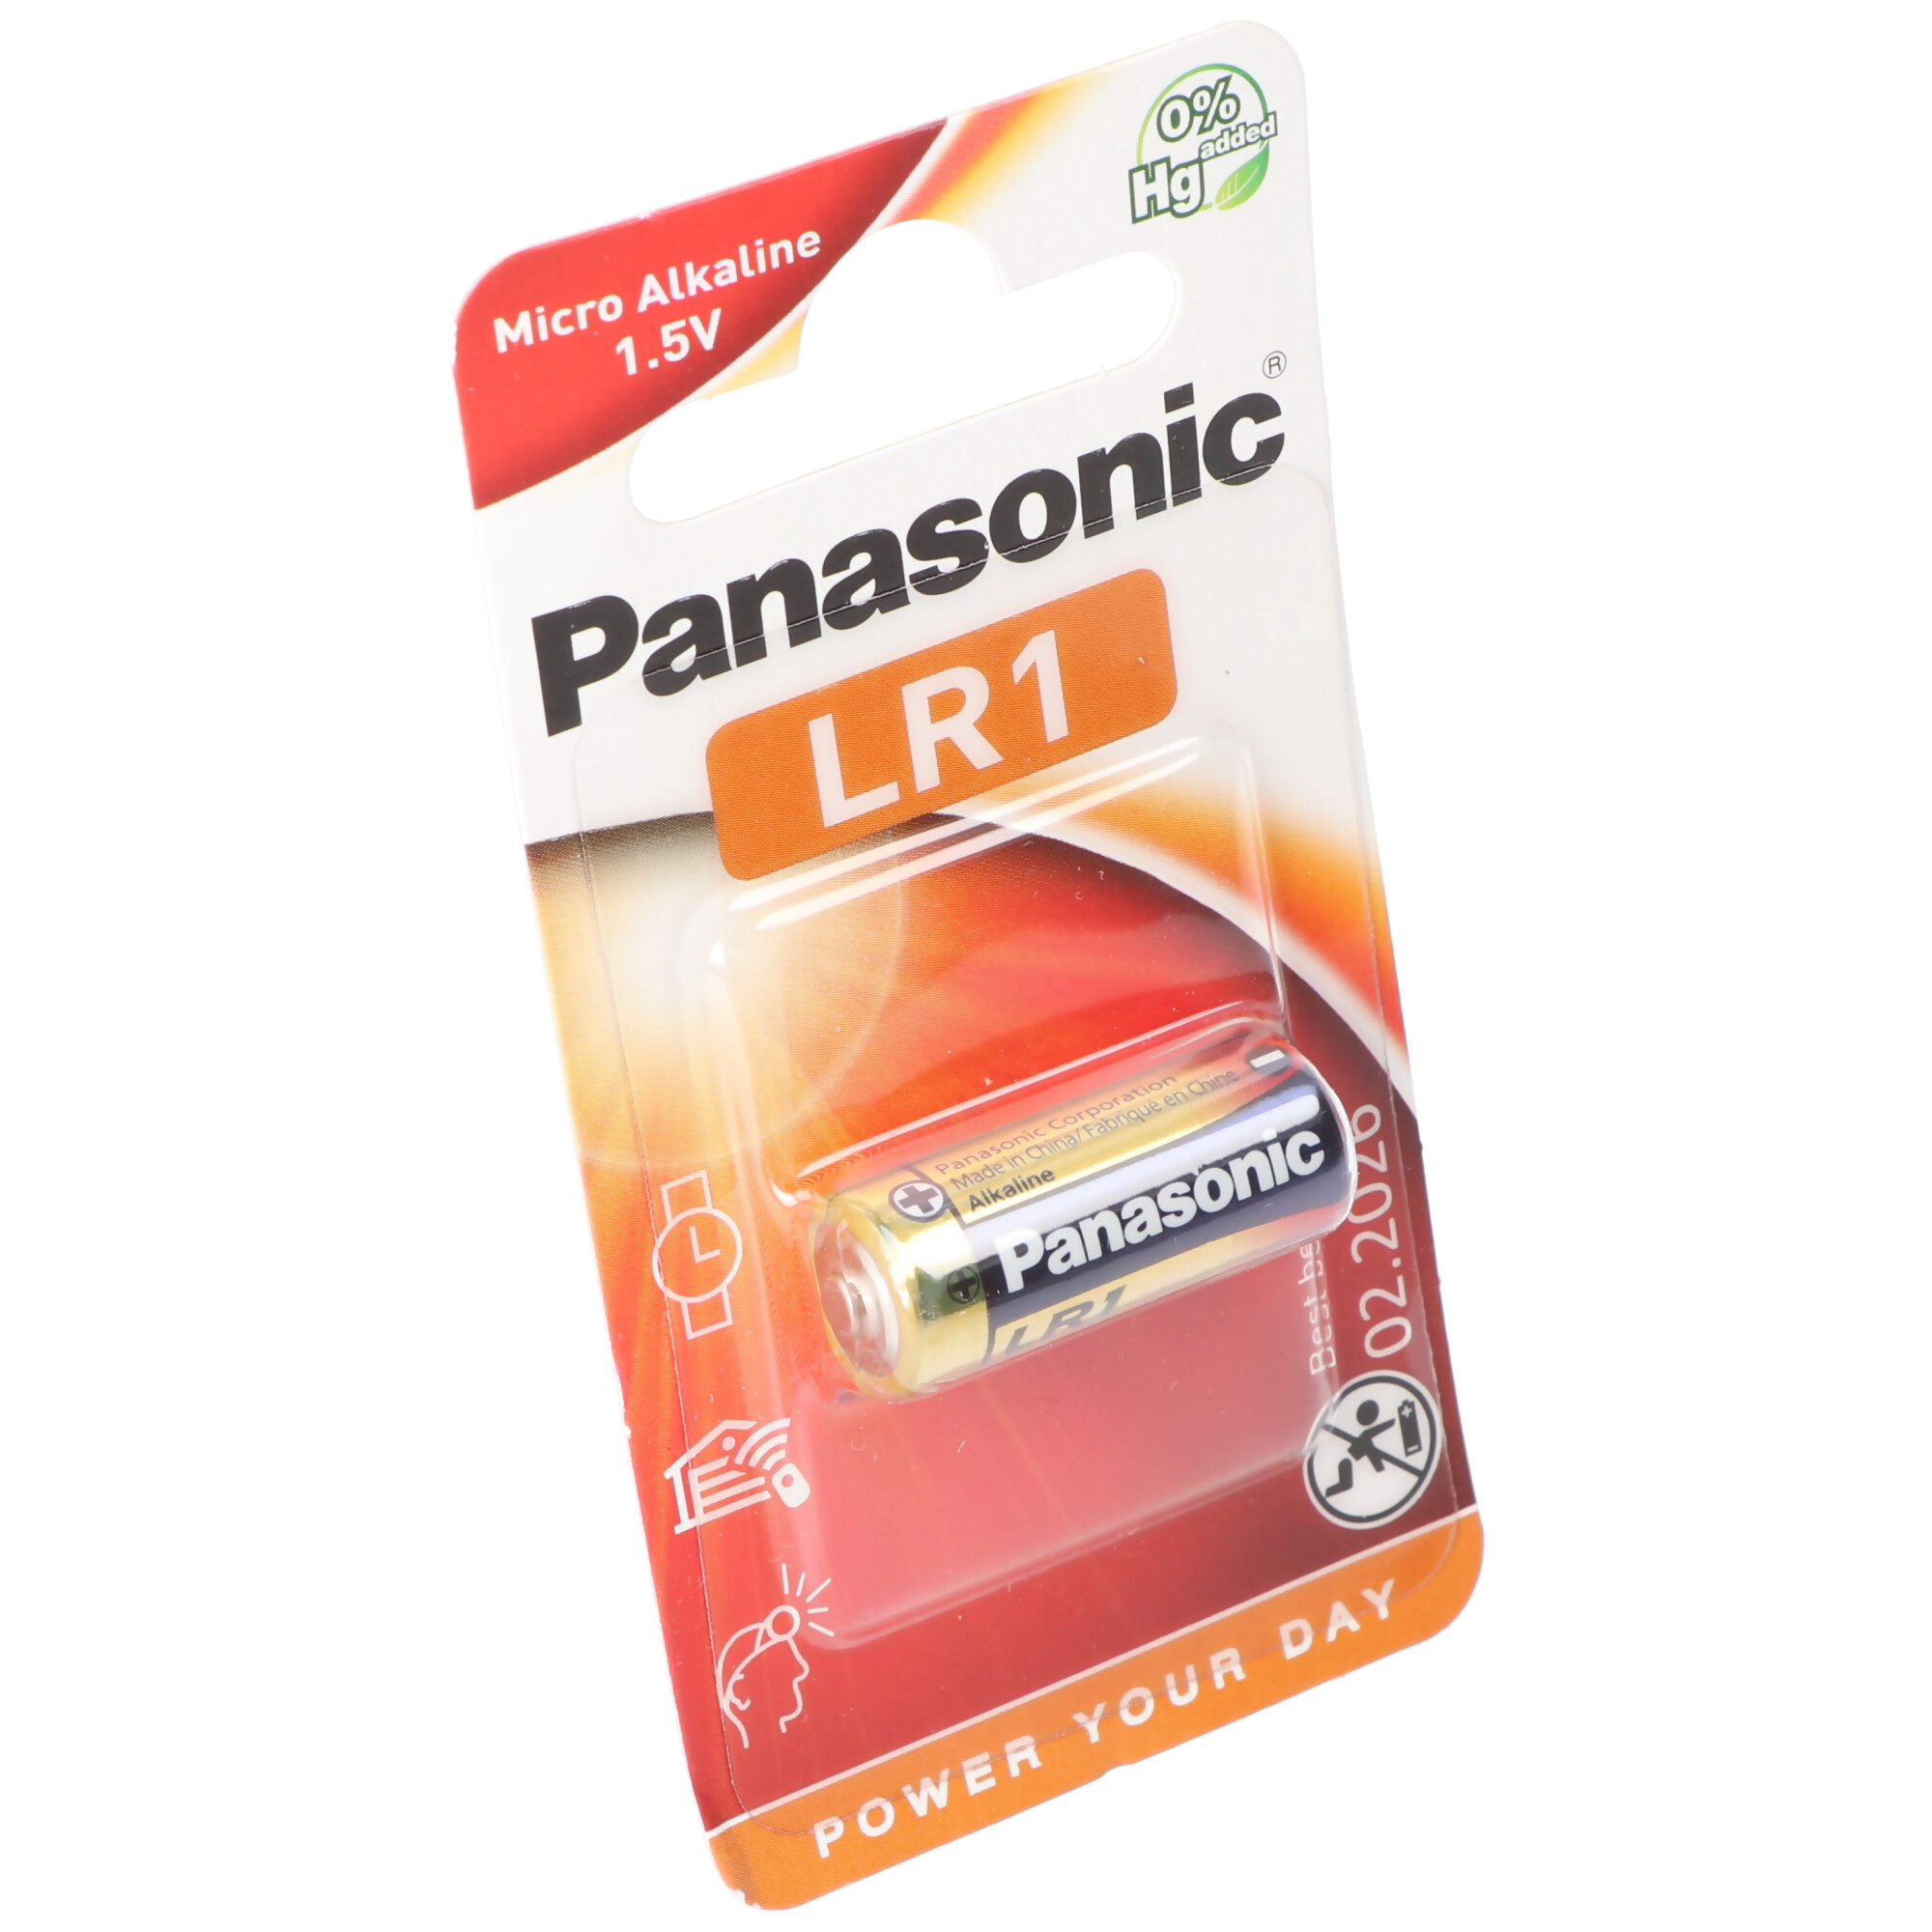 Panasonic PowerMax3 LR1, Lady Size N, GP910A, E90, 1,5 Volt max. 900mAh